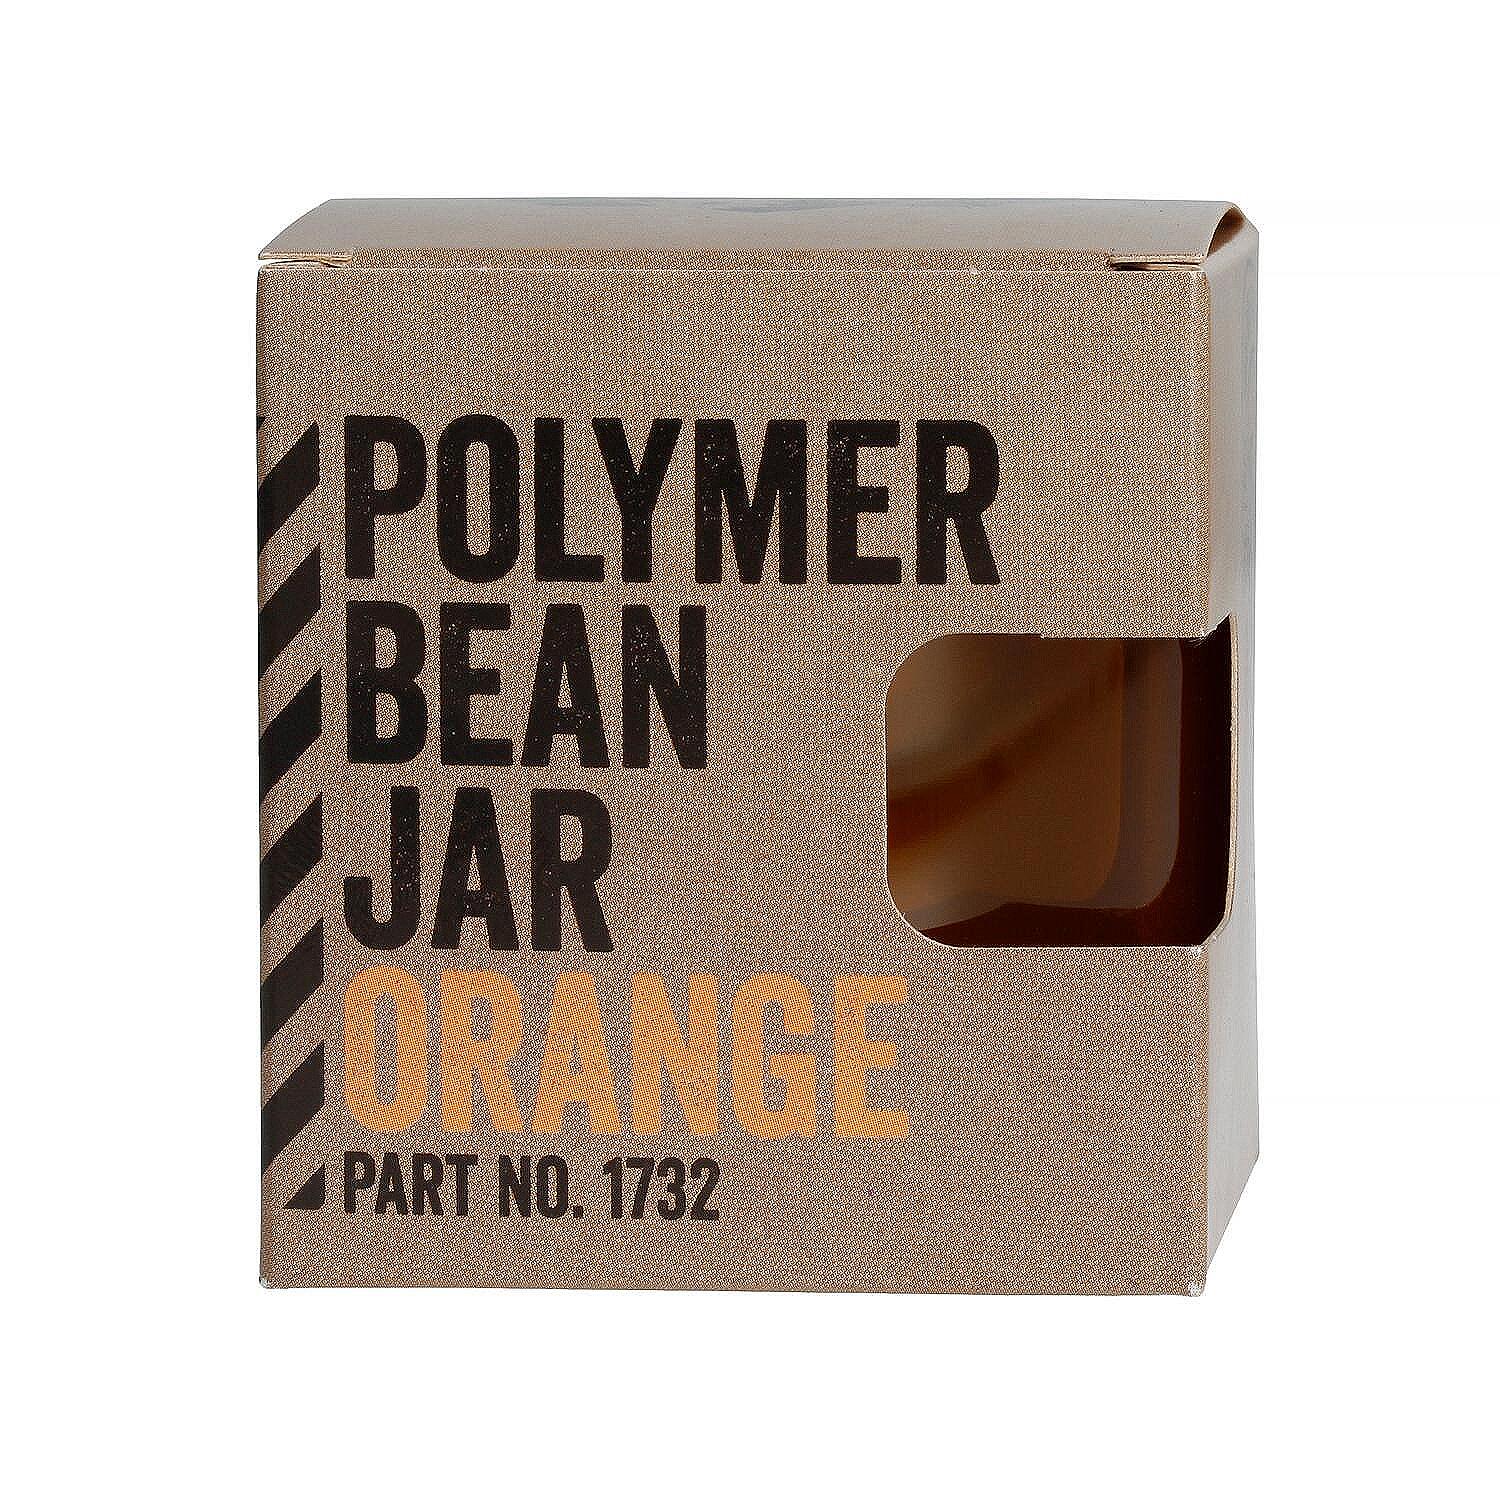 Comandante Bean Jar - Orange Polymer